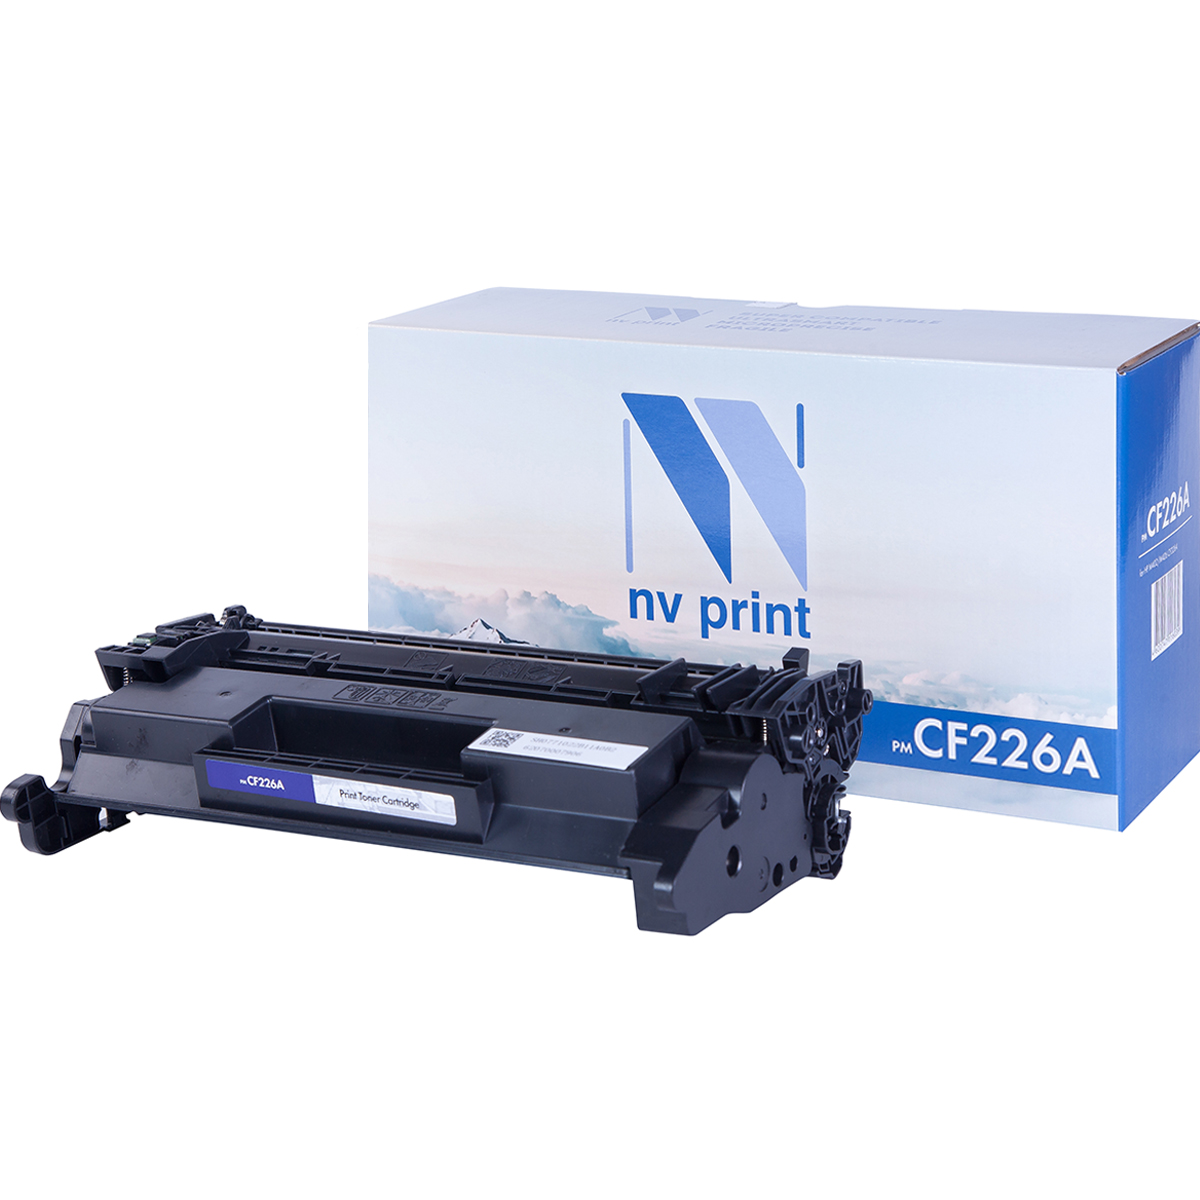   NV Print NV-CF226A (HP LaserJet Pro M402, M402dn, M402dn, M402dne, M402dw, M402n, M426dw, M426fdn, M426fdw, 3100.)